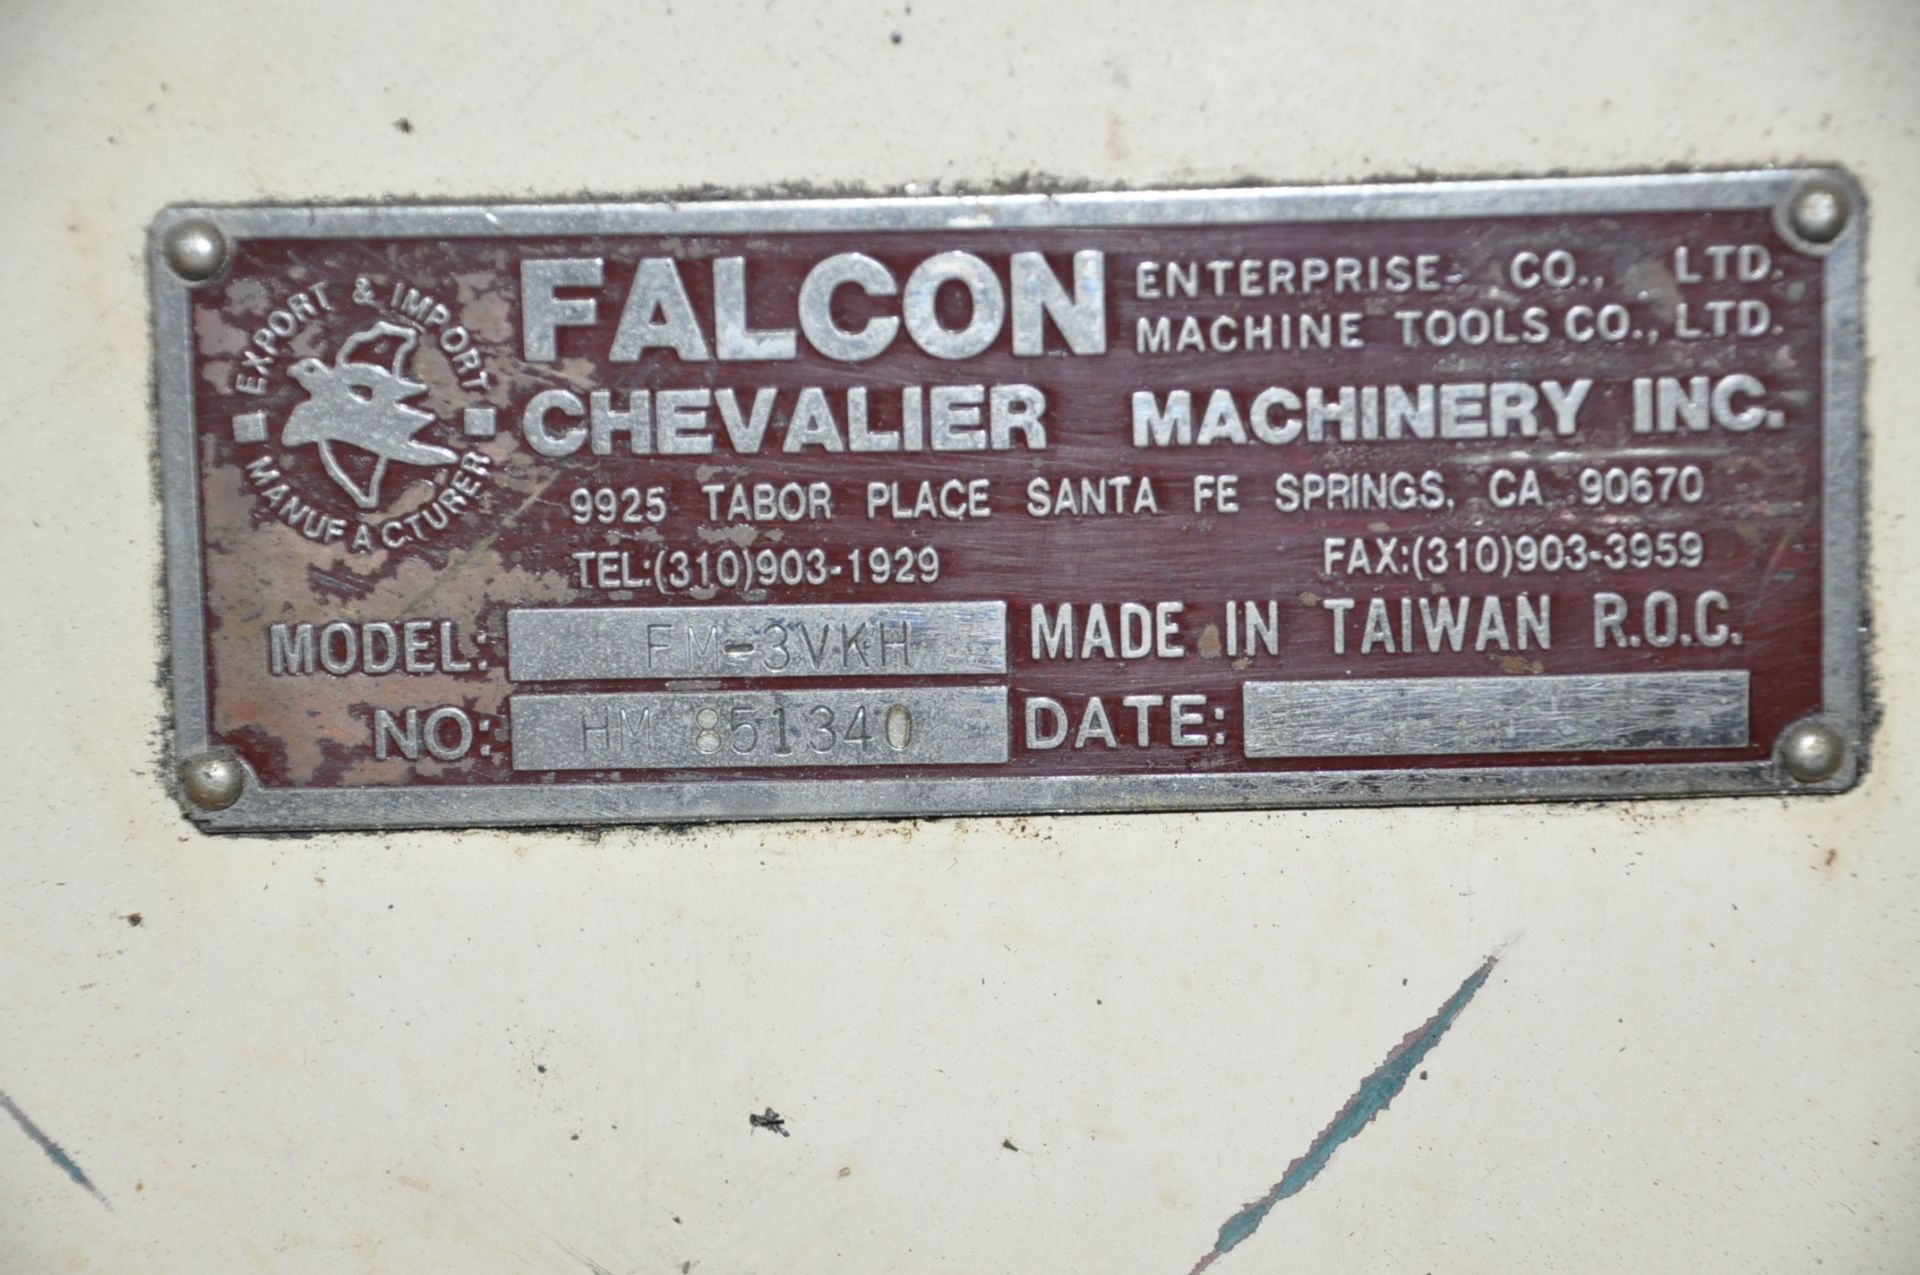 Chevalier Model FM-3VKH, 3-HP Vertical Milling Machine, S/n HM851340, - Image 7 of 7